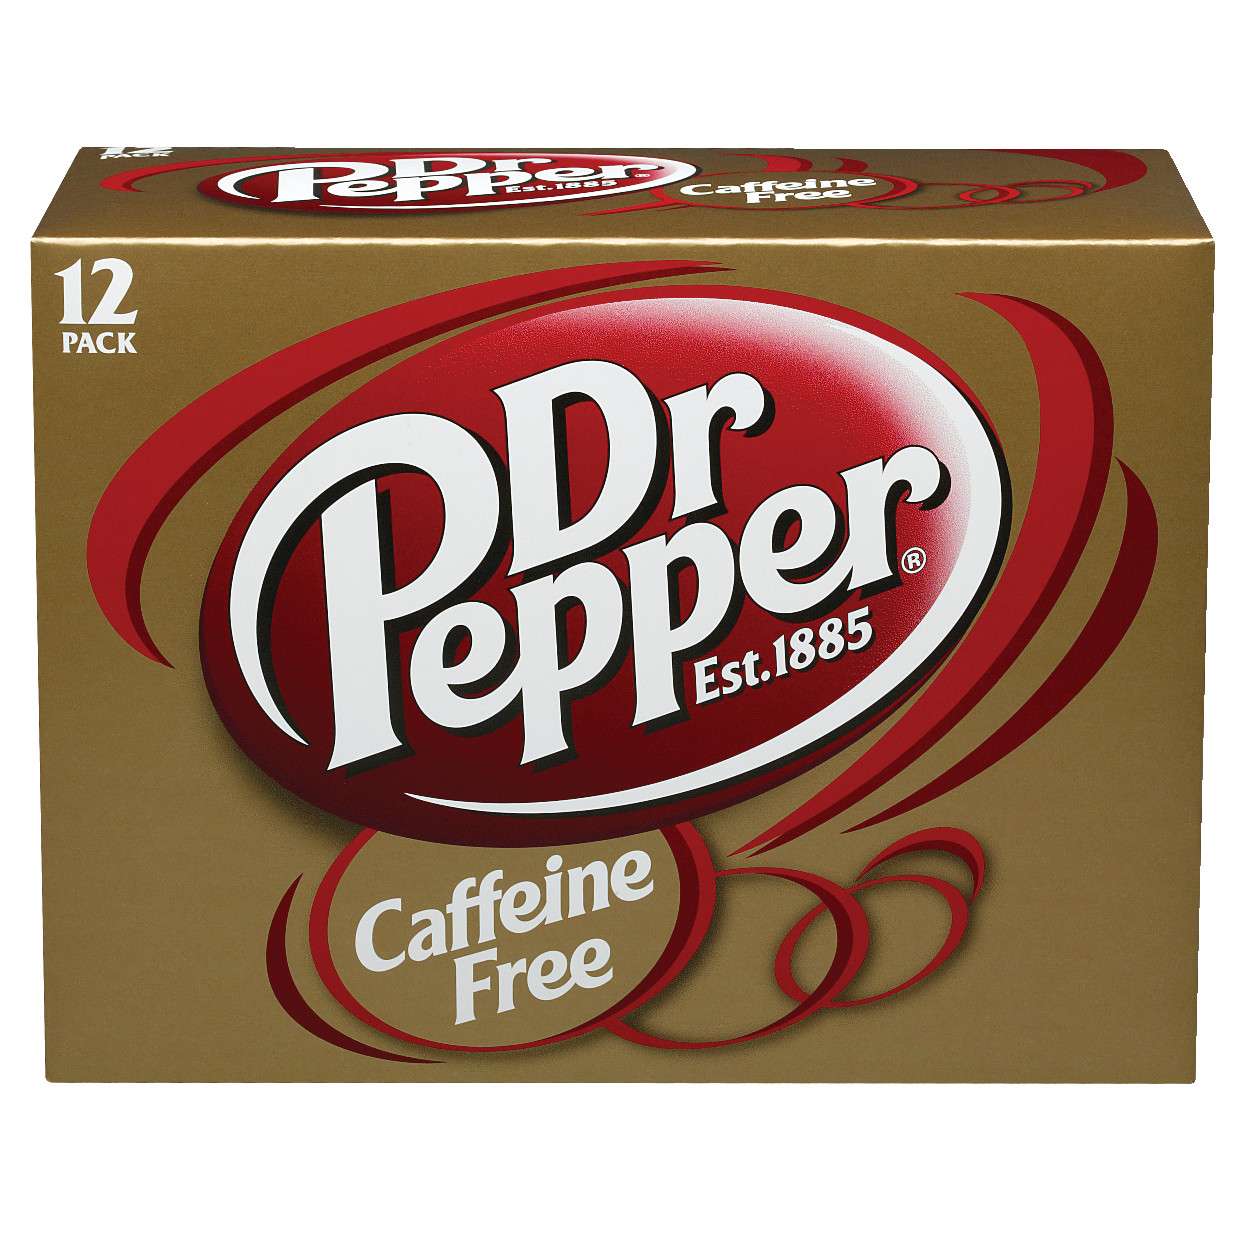 Caffeine Free Dr Pepper, 12 fl oz cans, 12 pack